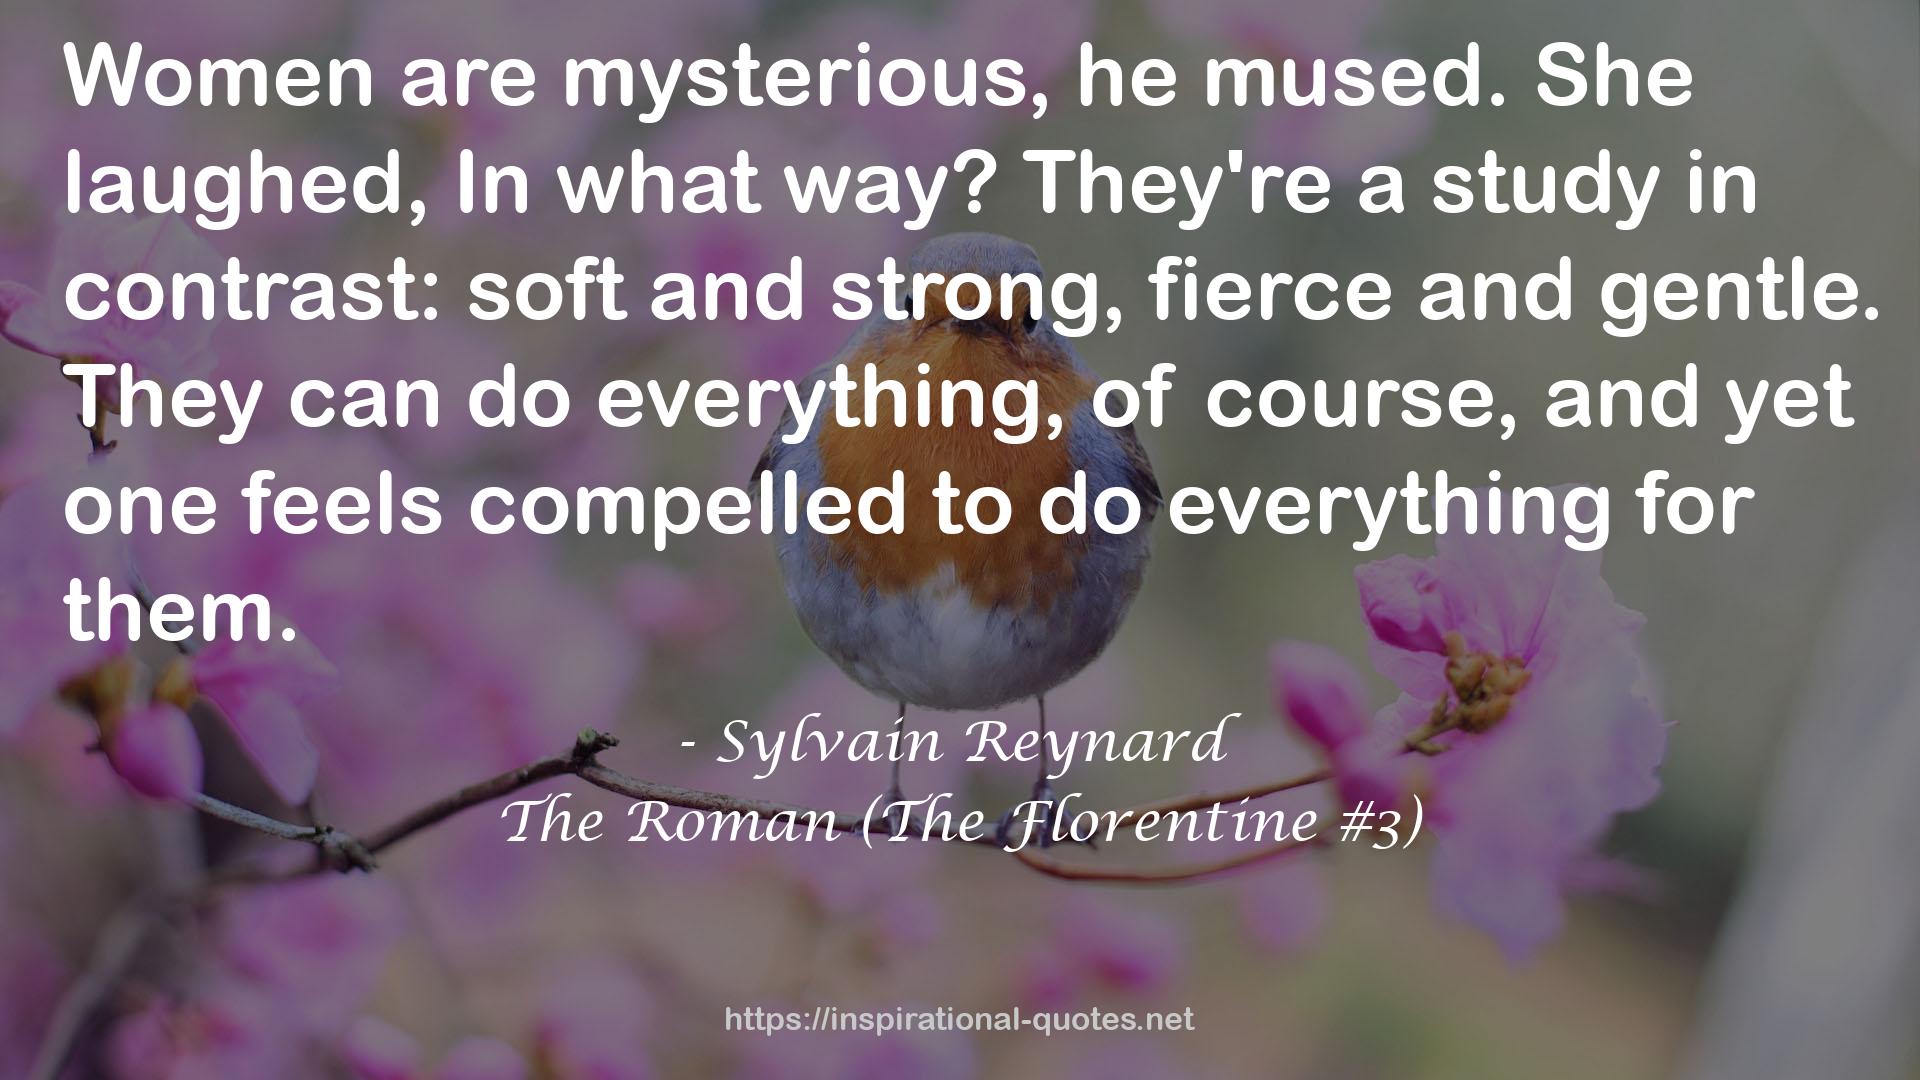 The Roman (The Florentine #3) QUOTES